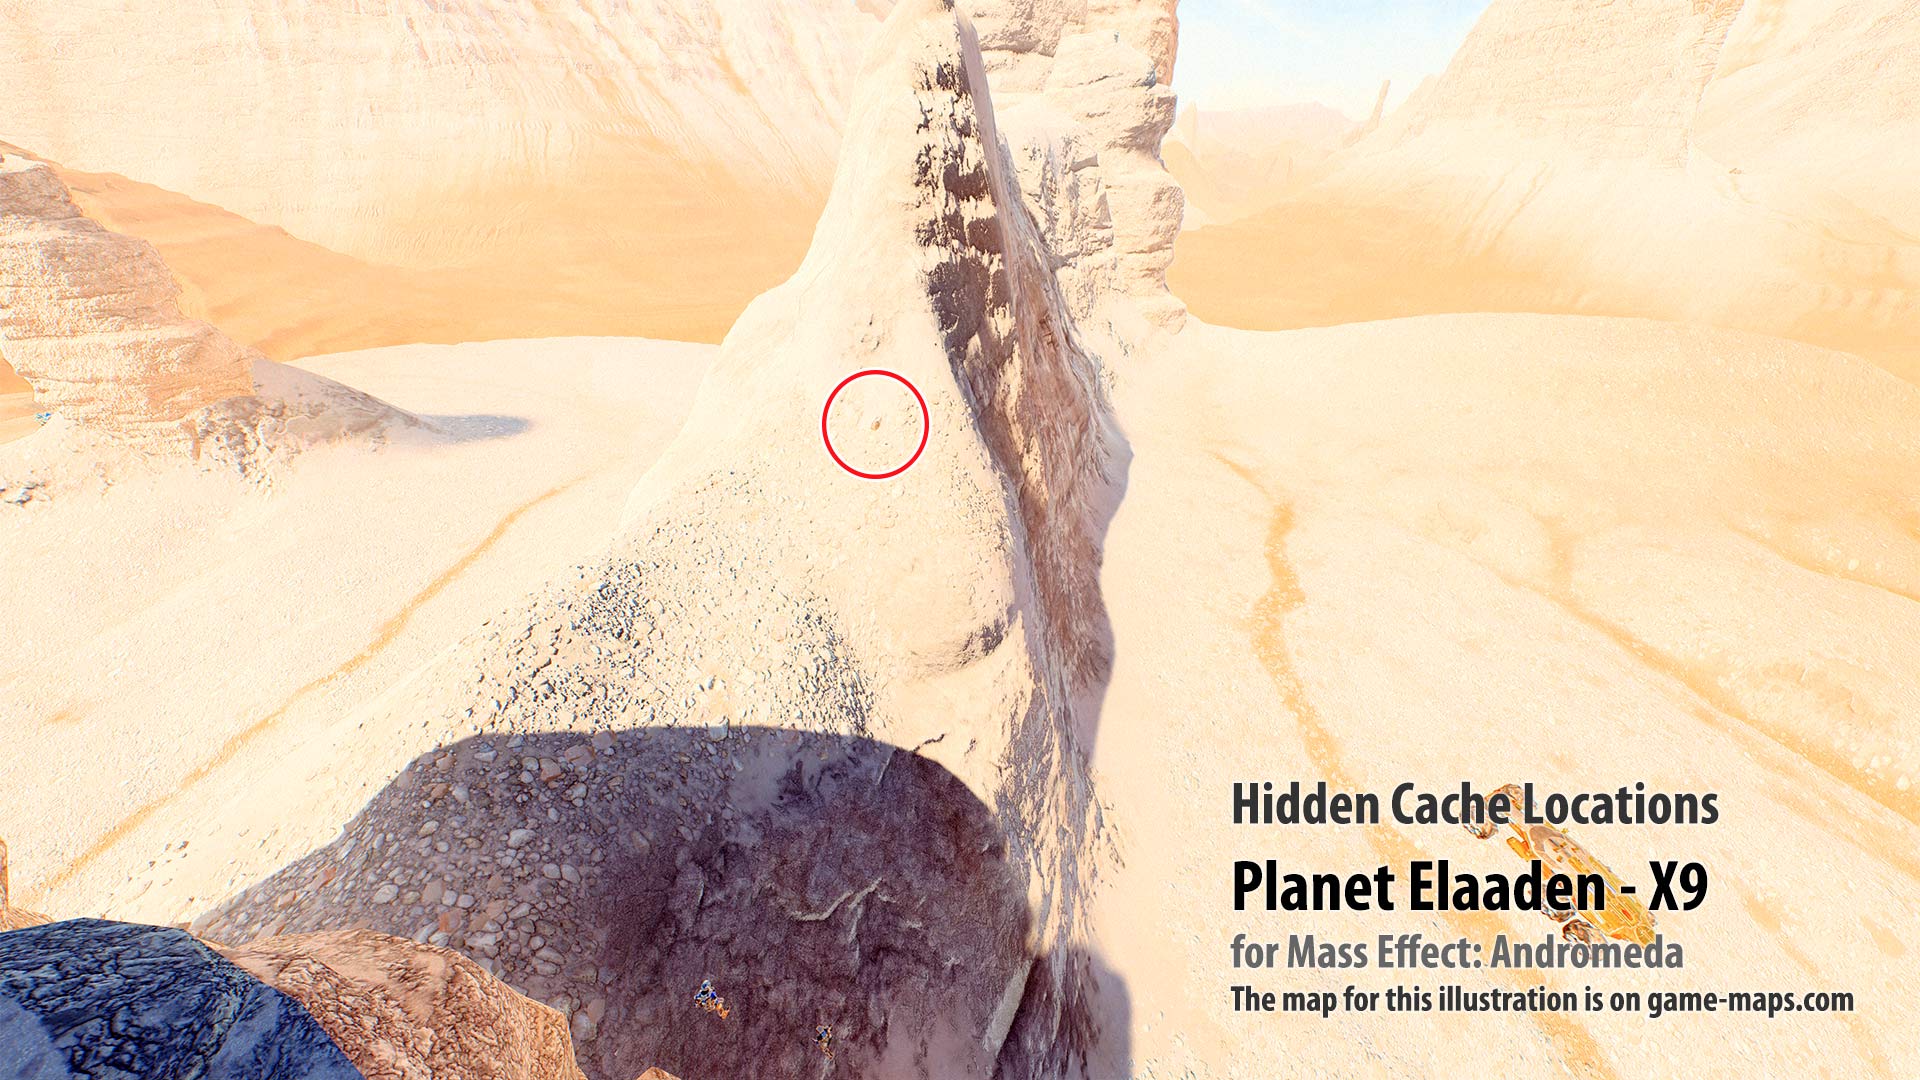 Hidden Cache - Planet Elaaden-X9 - Mass Effect Andromeda.